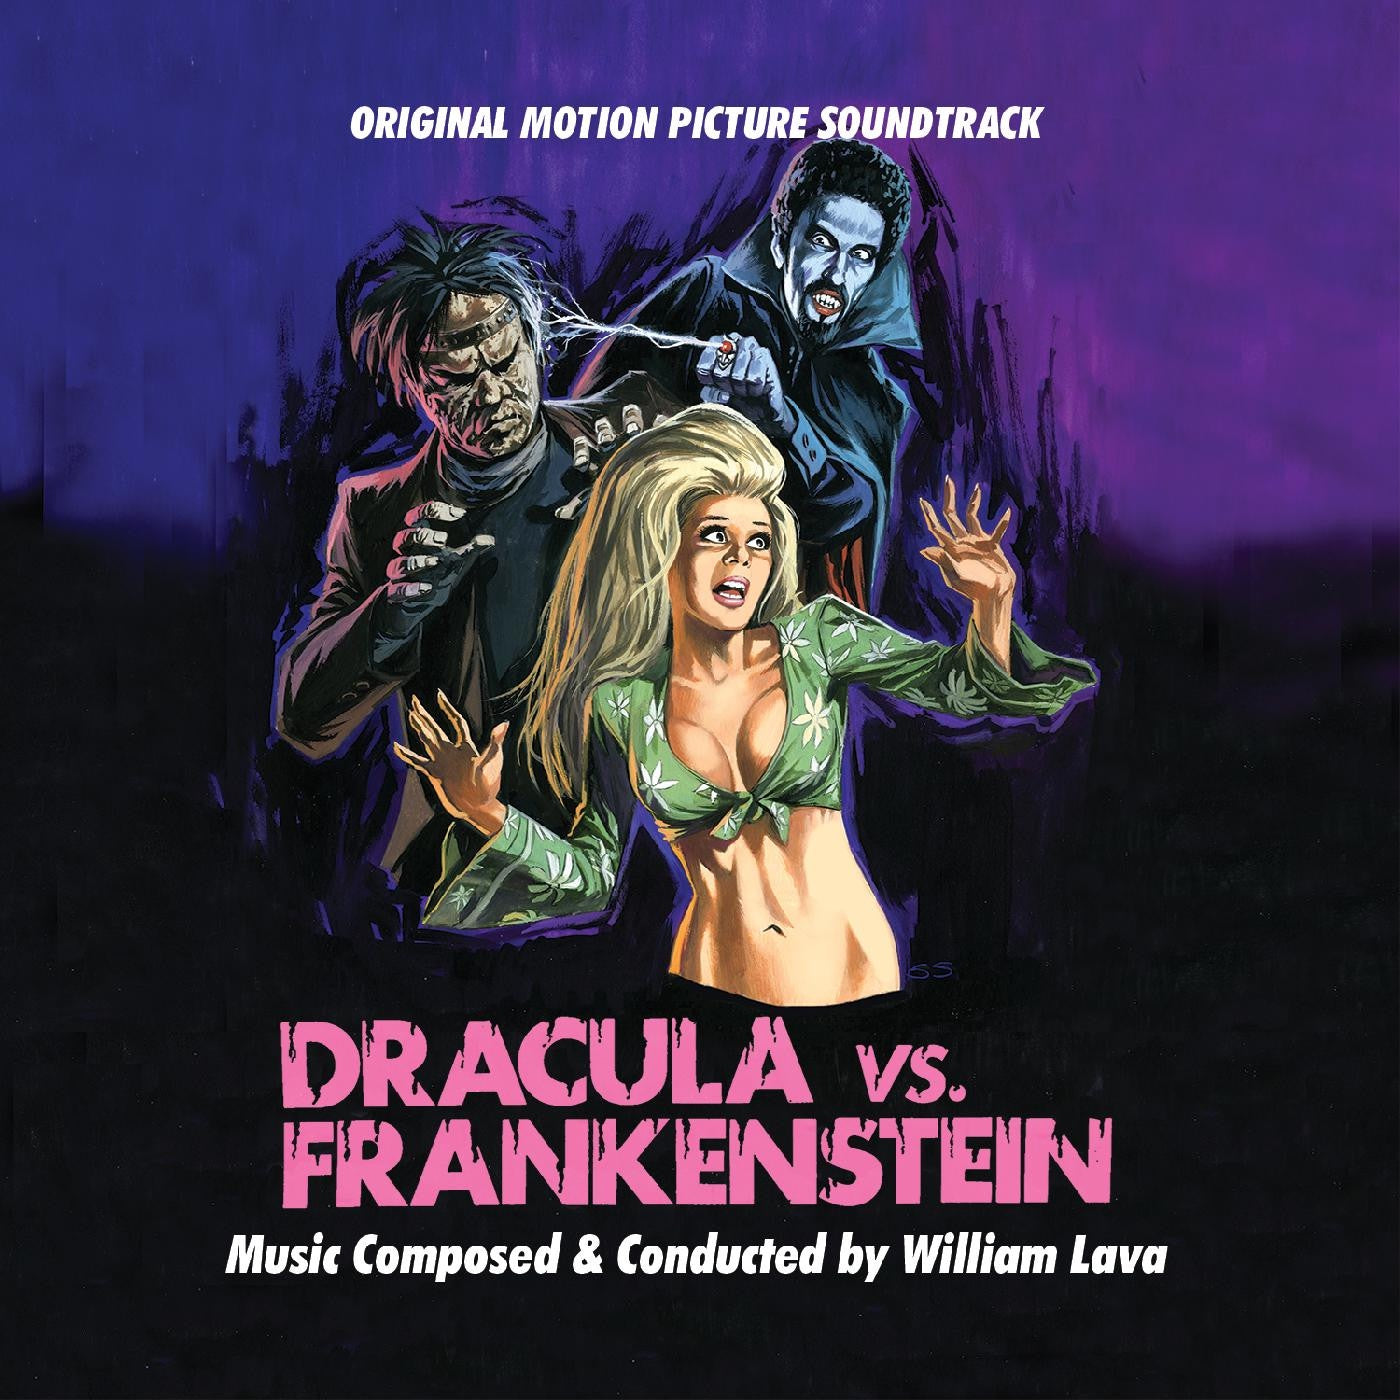 William Lava – (Original Motion Picture Soundtrack) Dracula vs. Frankenstein (1971) - New LP Real Gone Music Orange Pumpkin Color Vinyl - Score